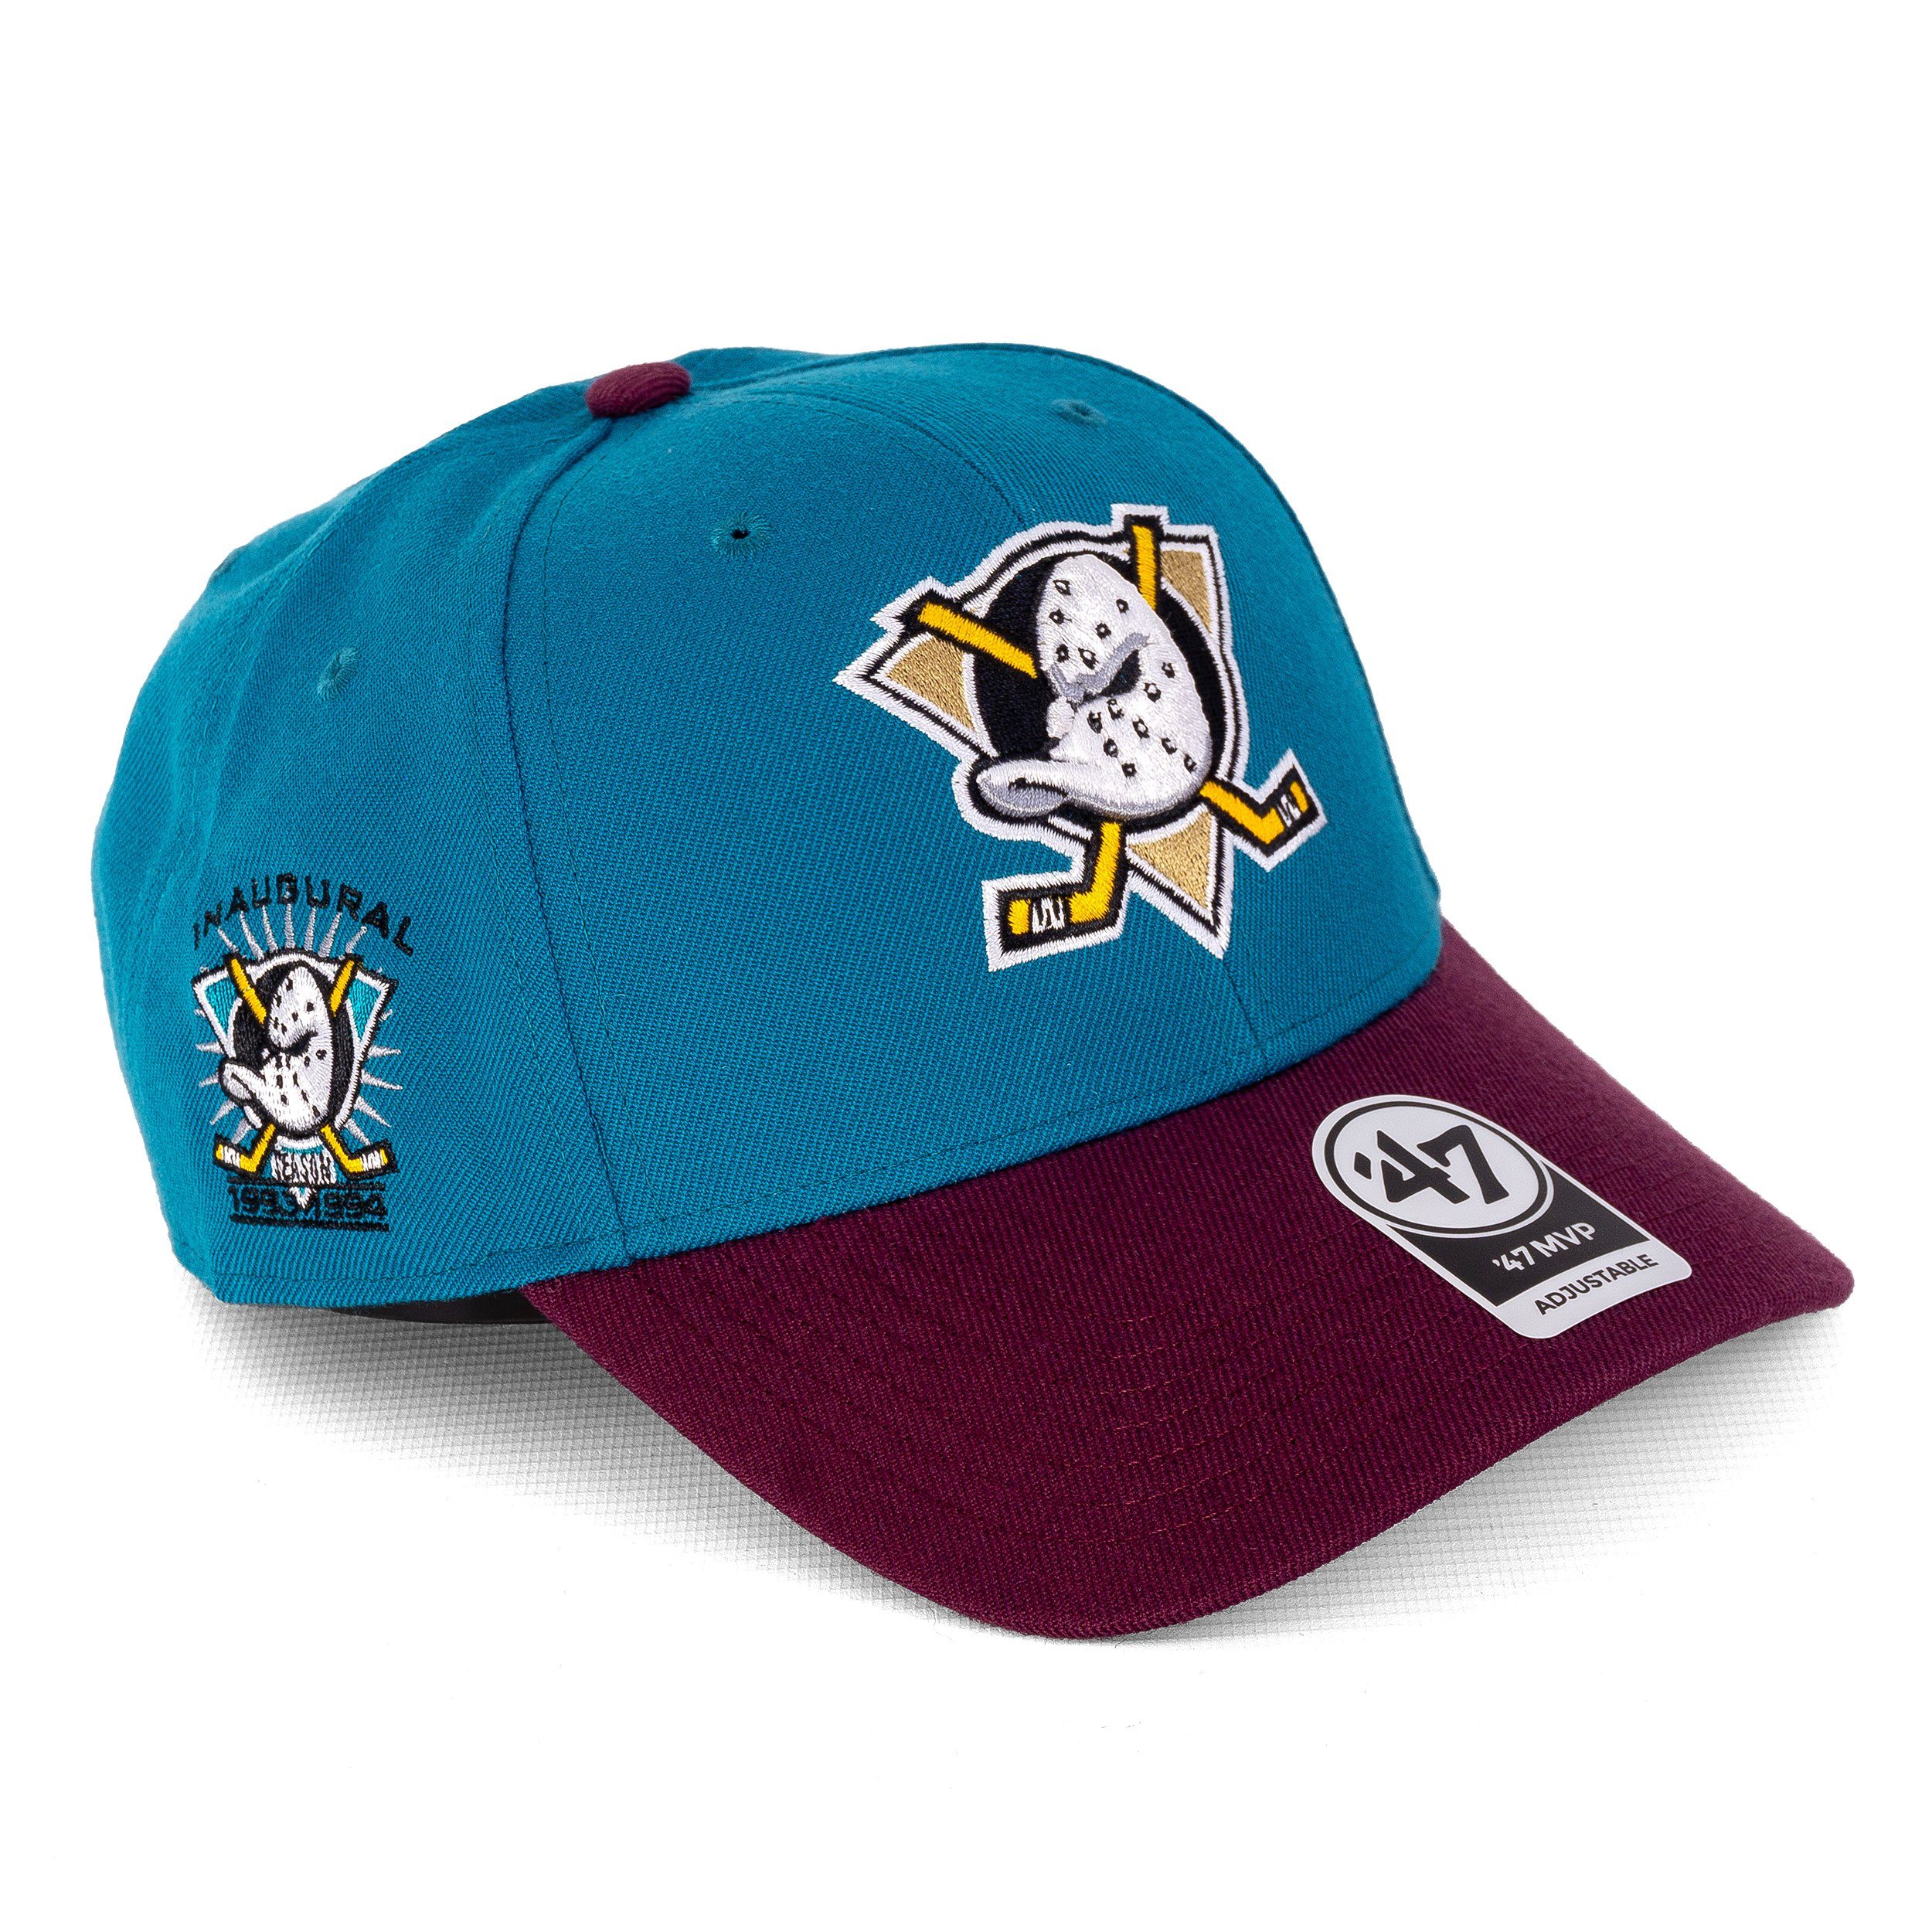 '47 Brand Baseball Cap '47 Brand Anaheim Ducks Snapback Cap teal bordo